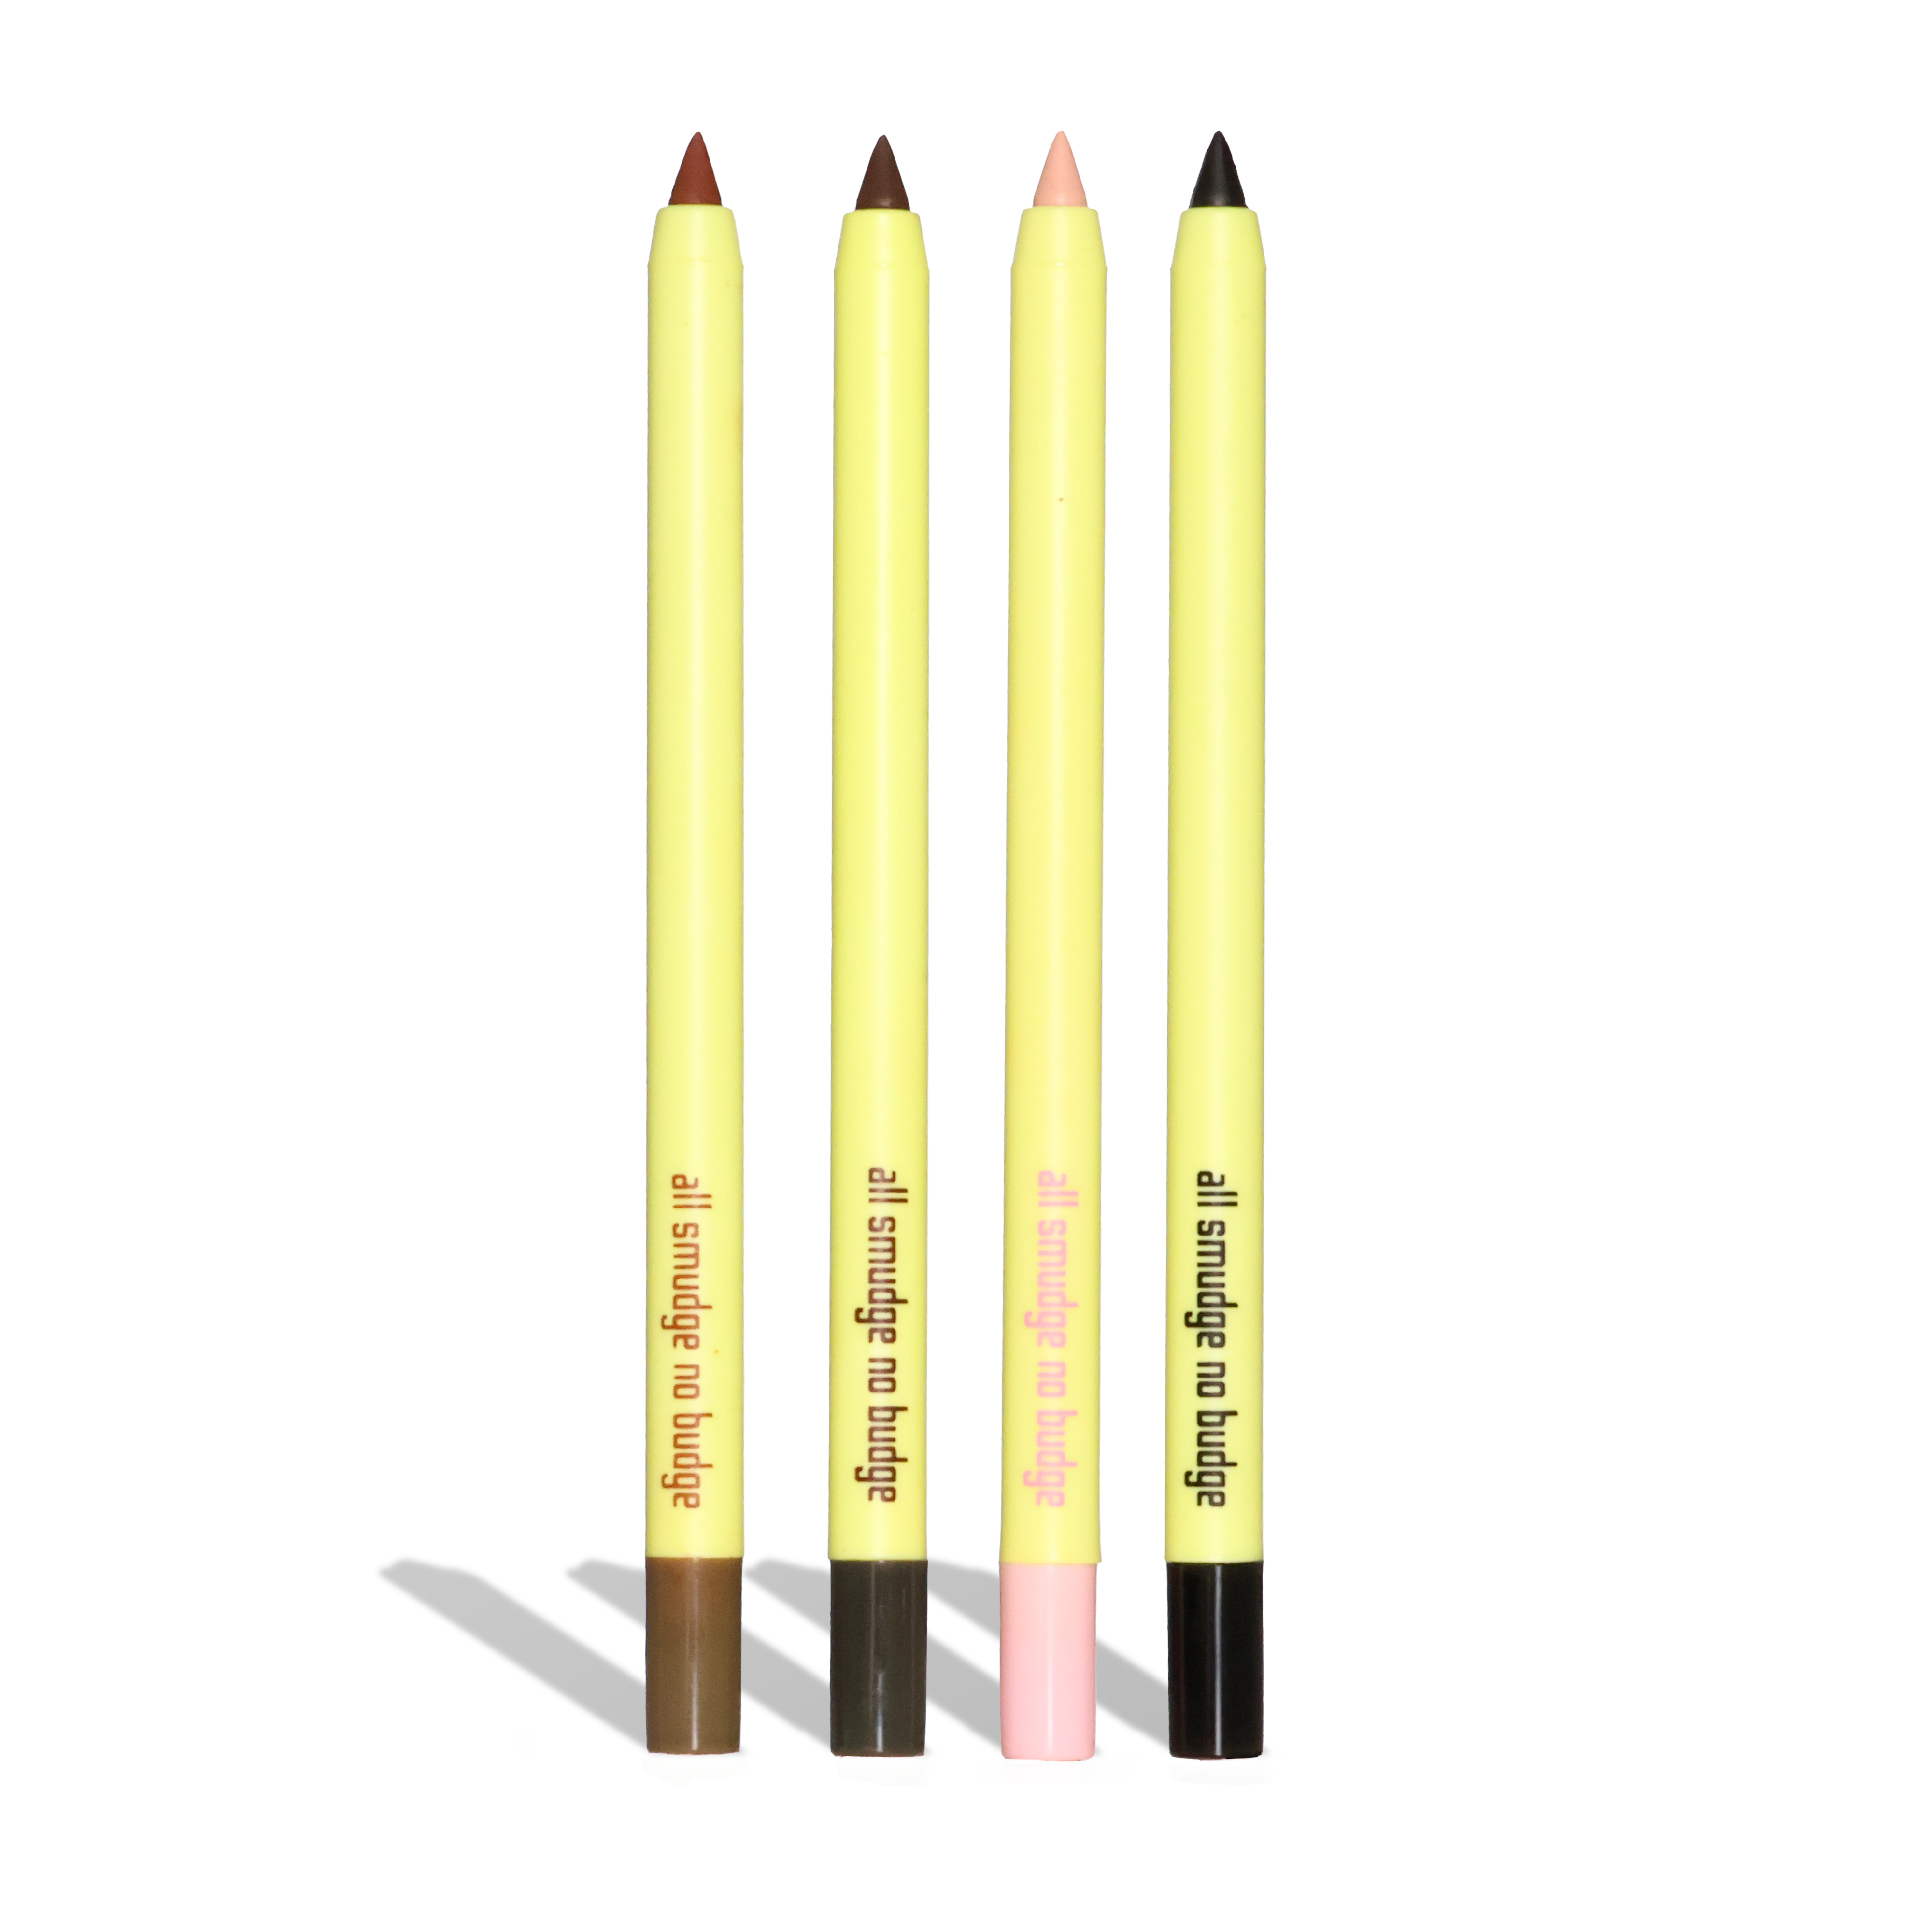 All Smudge No Budge Lip Liner Pencil